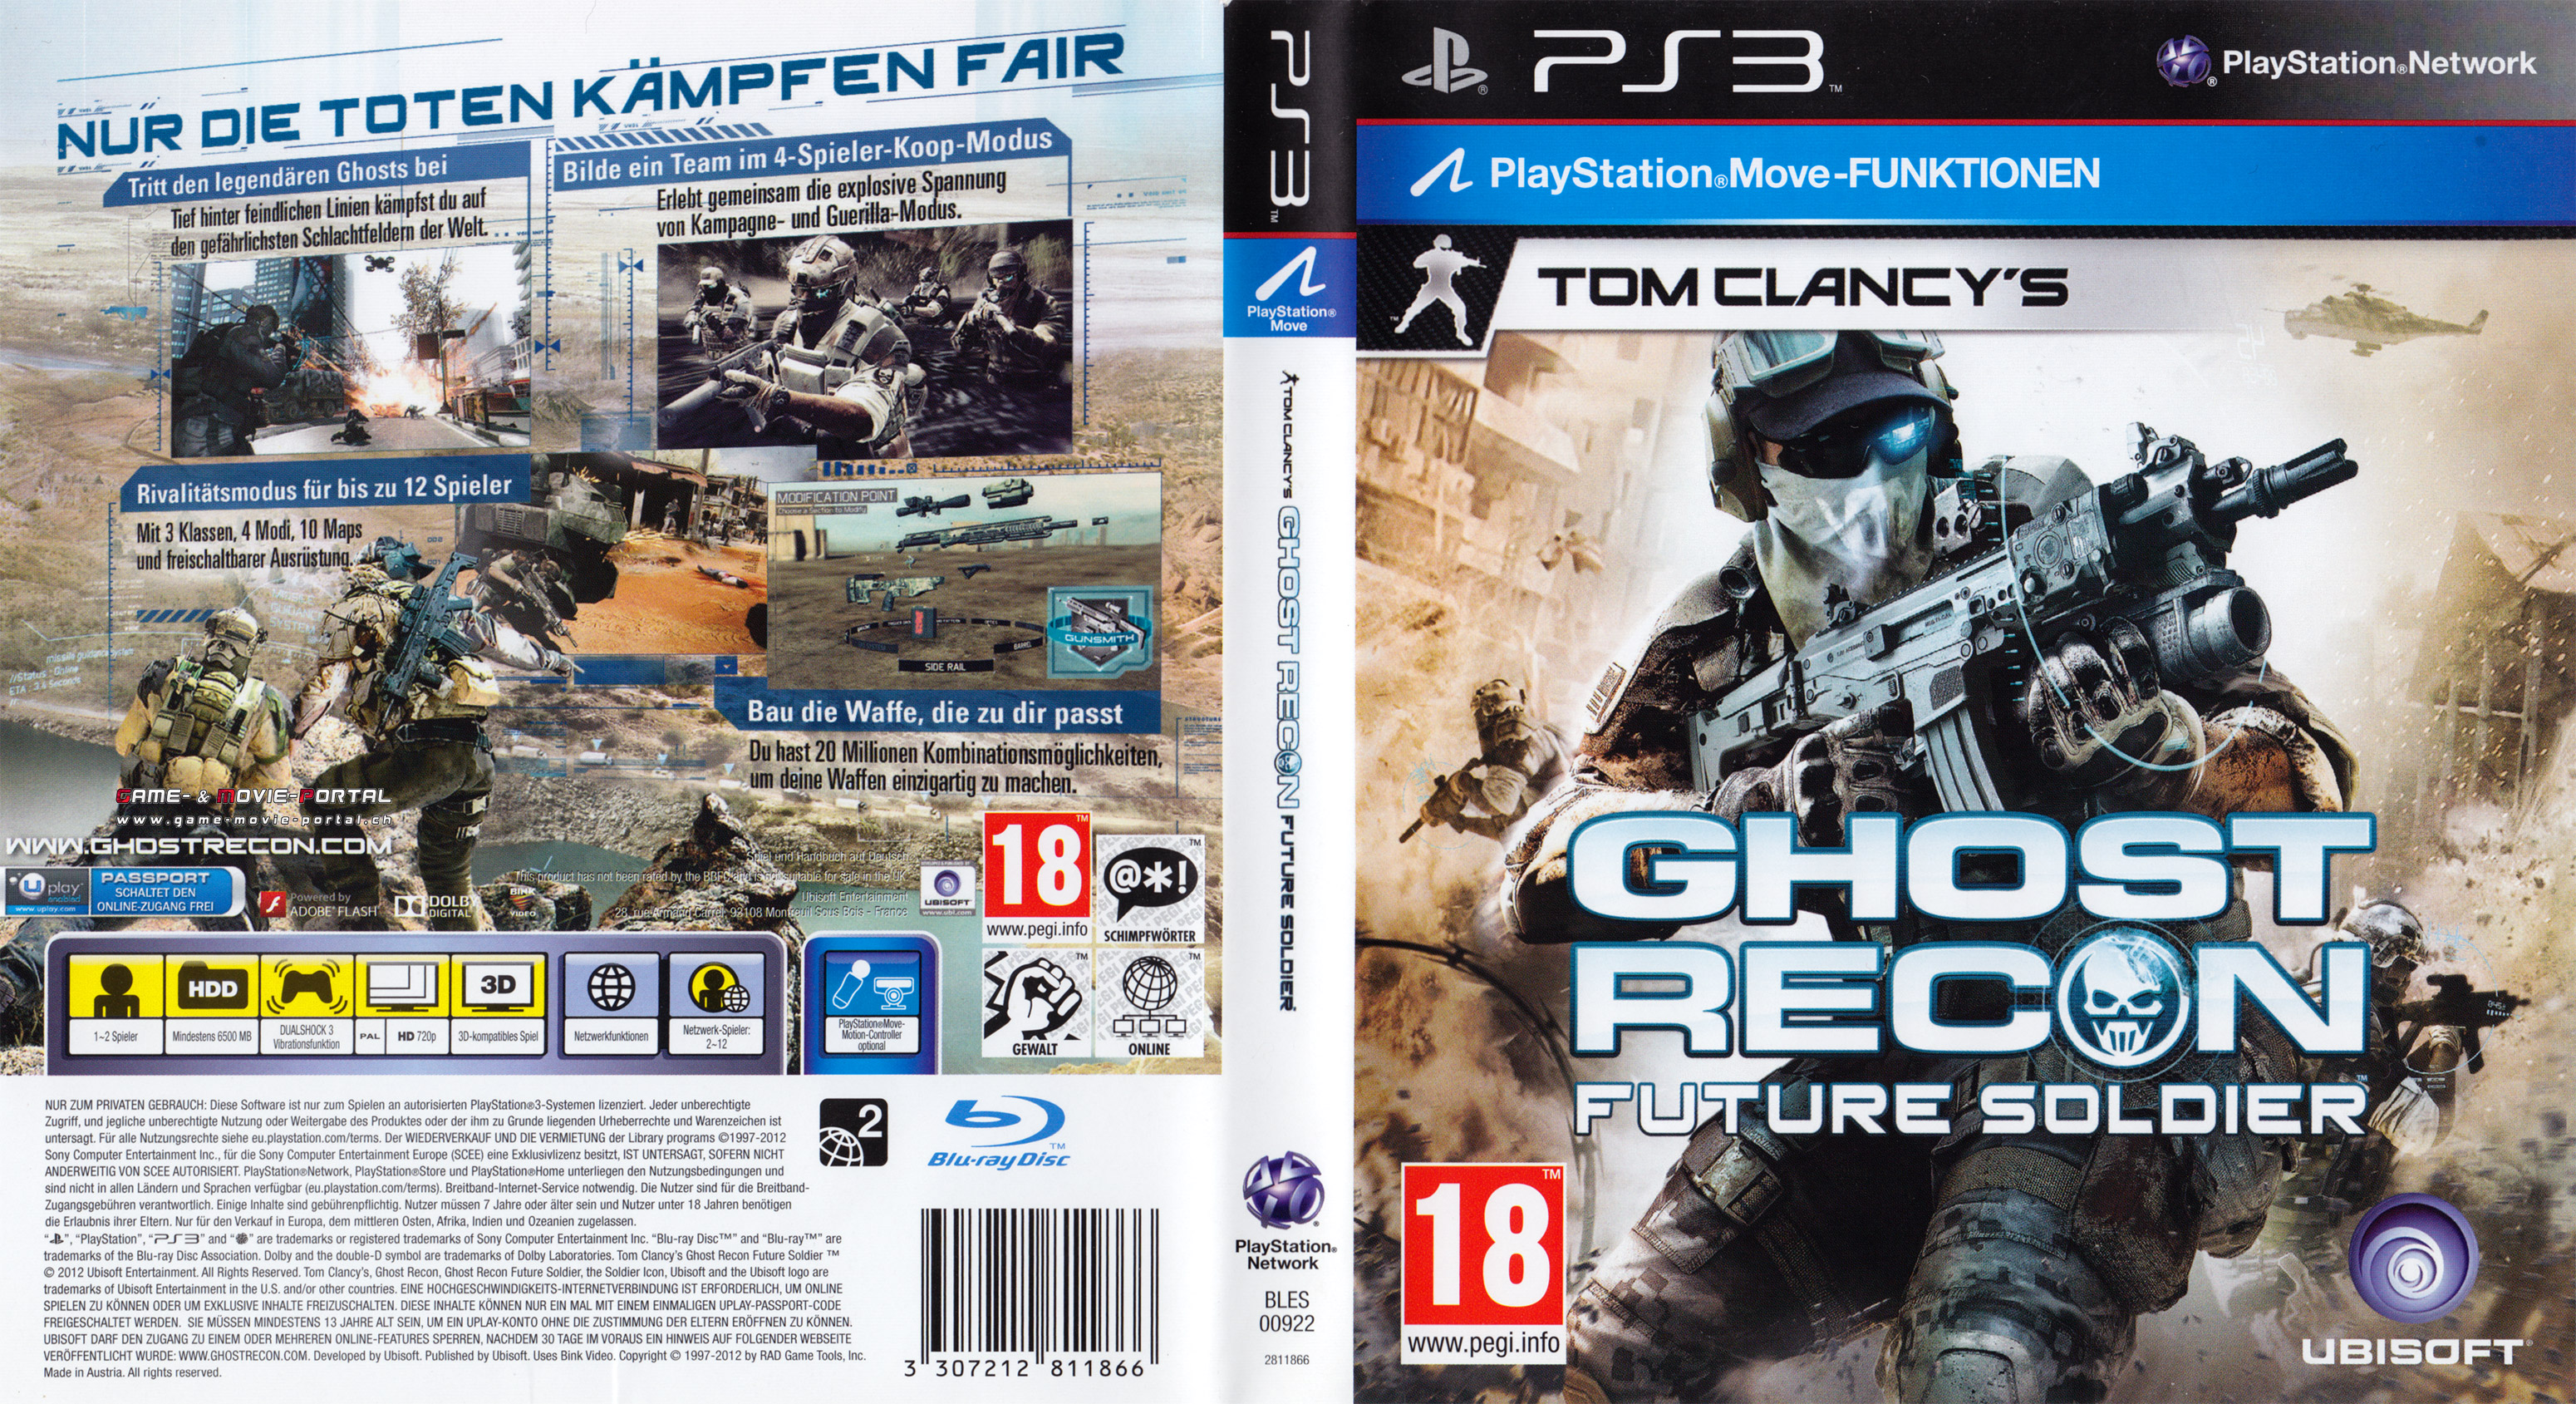 Ps3 tom. Ghost Recon на пс3. Future Soldier ps3 диск. Tom Clancy's Ghost Recon Future Soldier ps3 диск. Ghost Recon Future Soldier ps3.